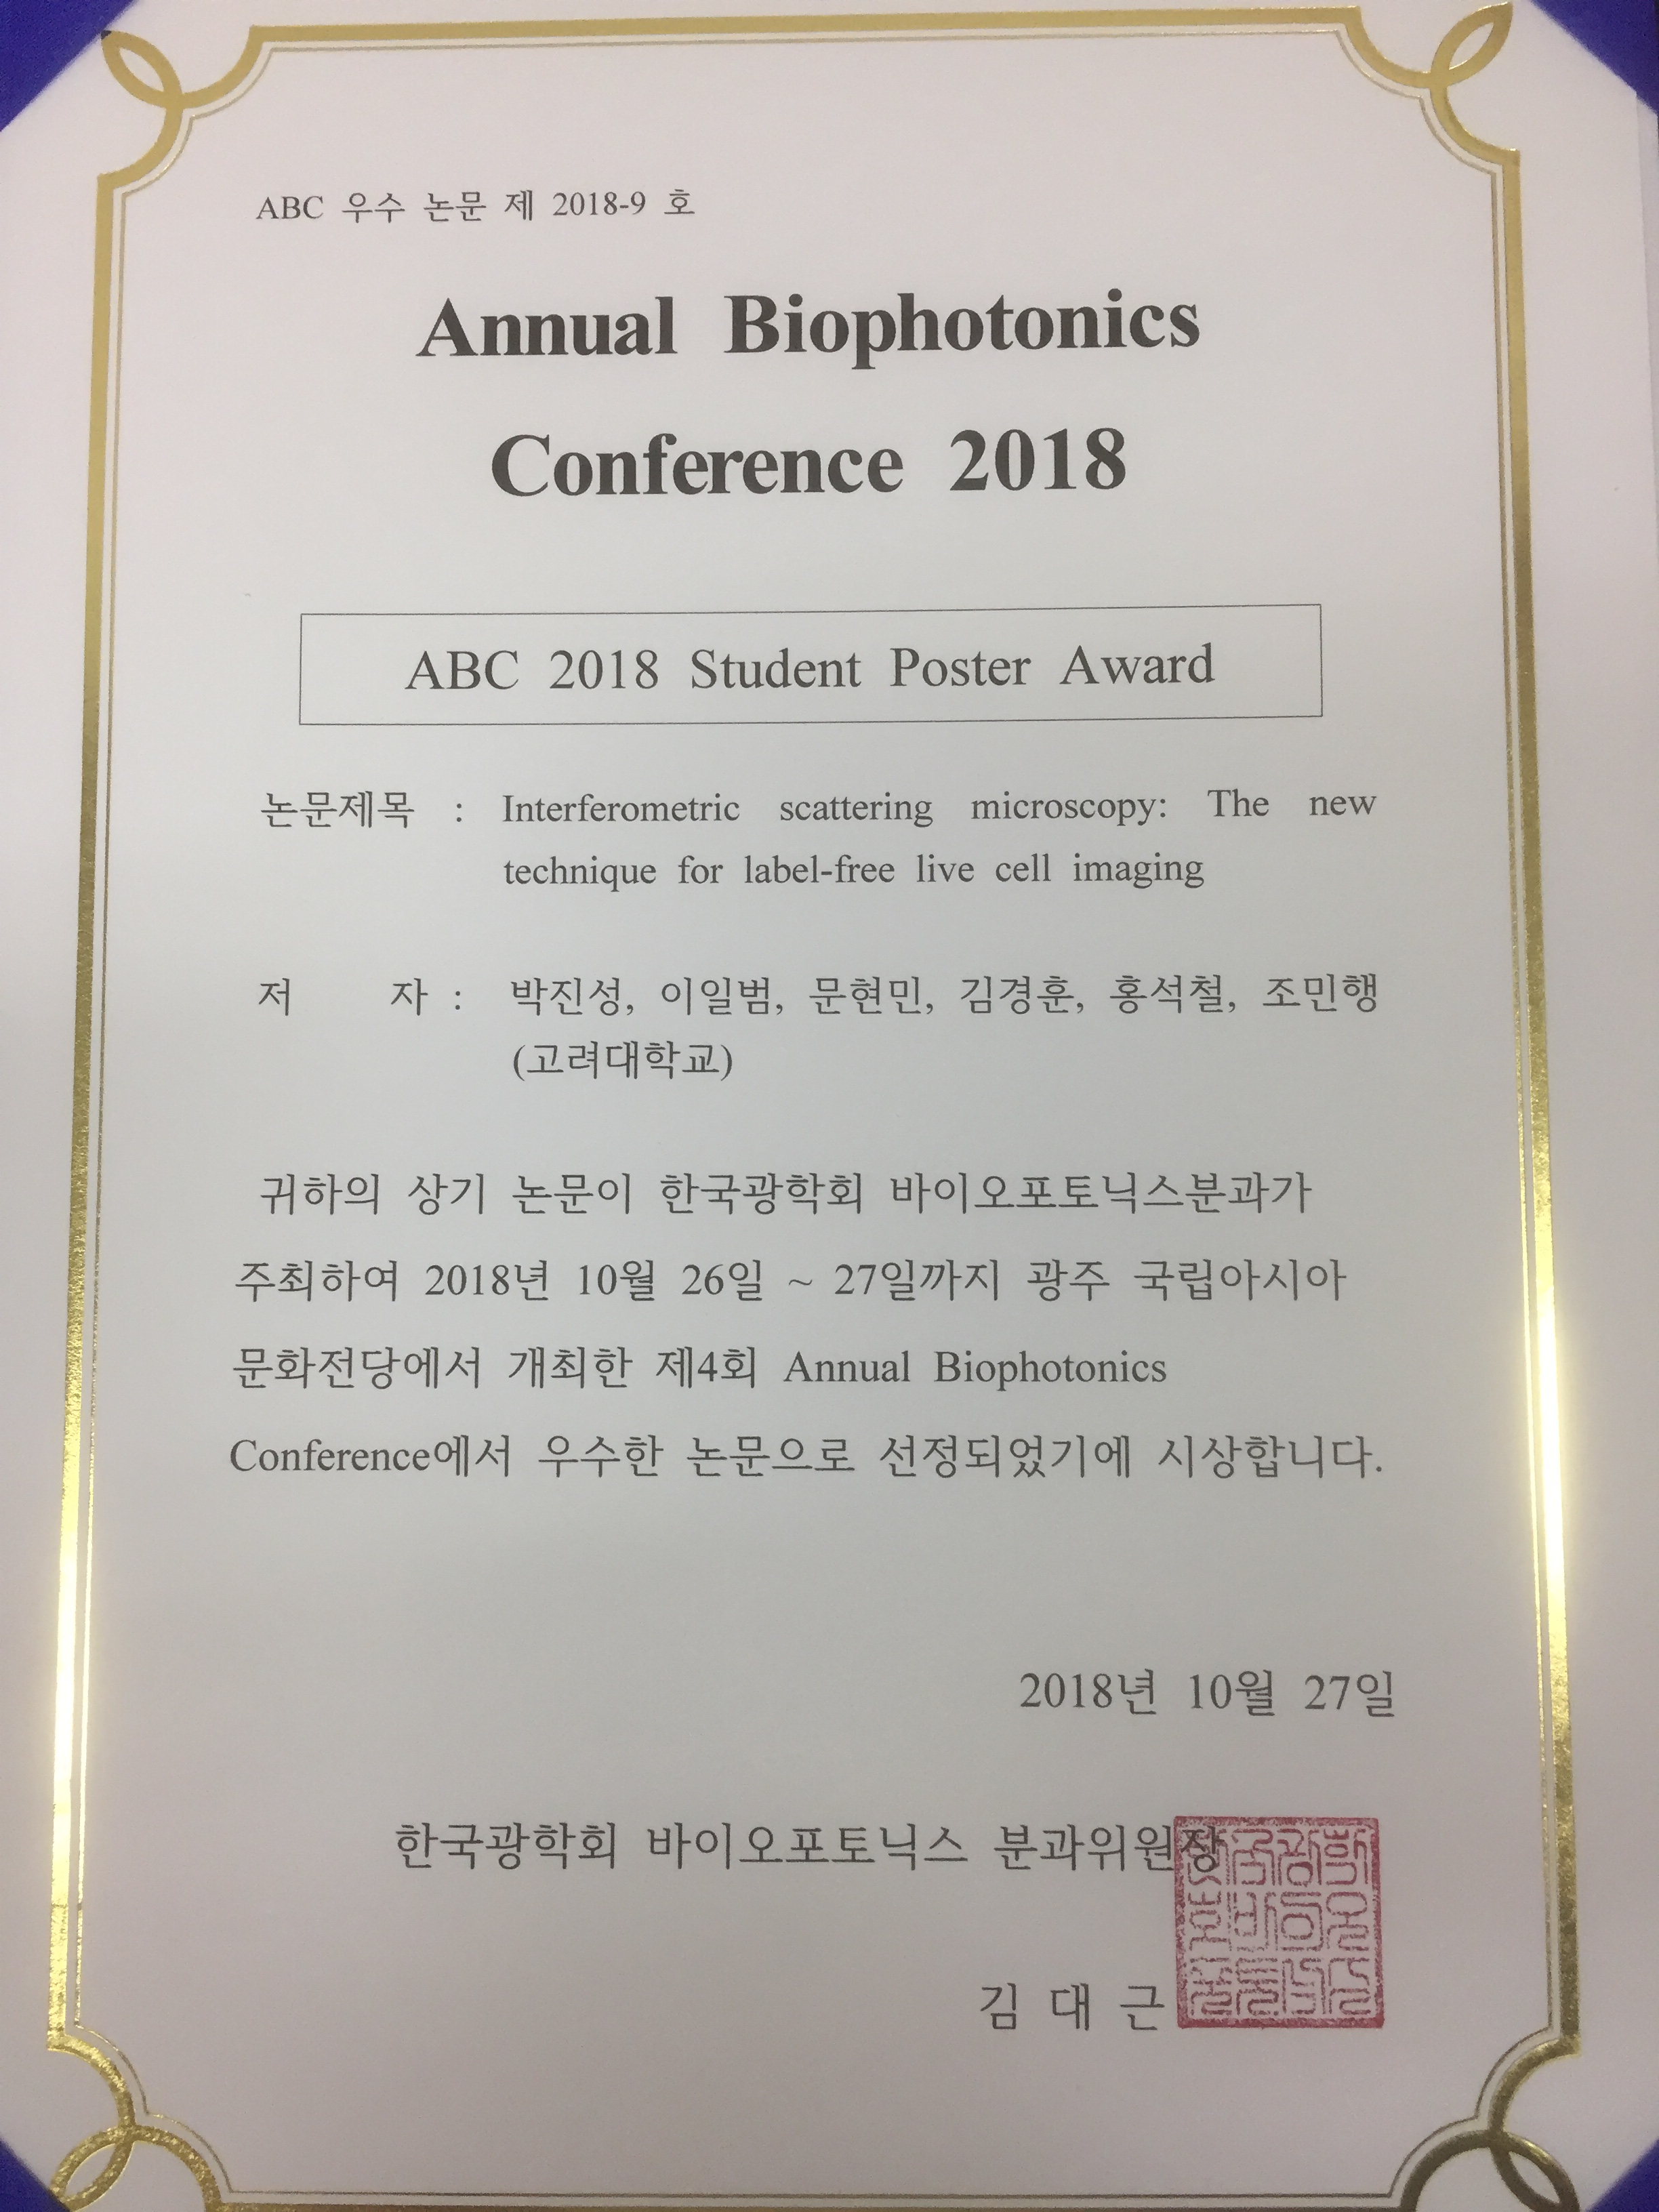 Best Poster Award in ABC 2018! (Prof. Seok-Cheol Hong's Lab)